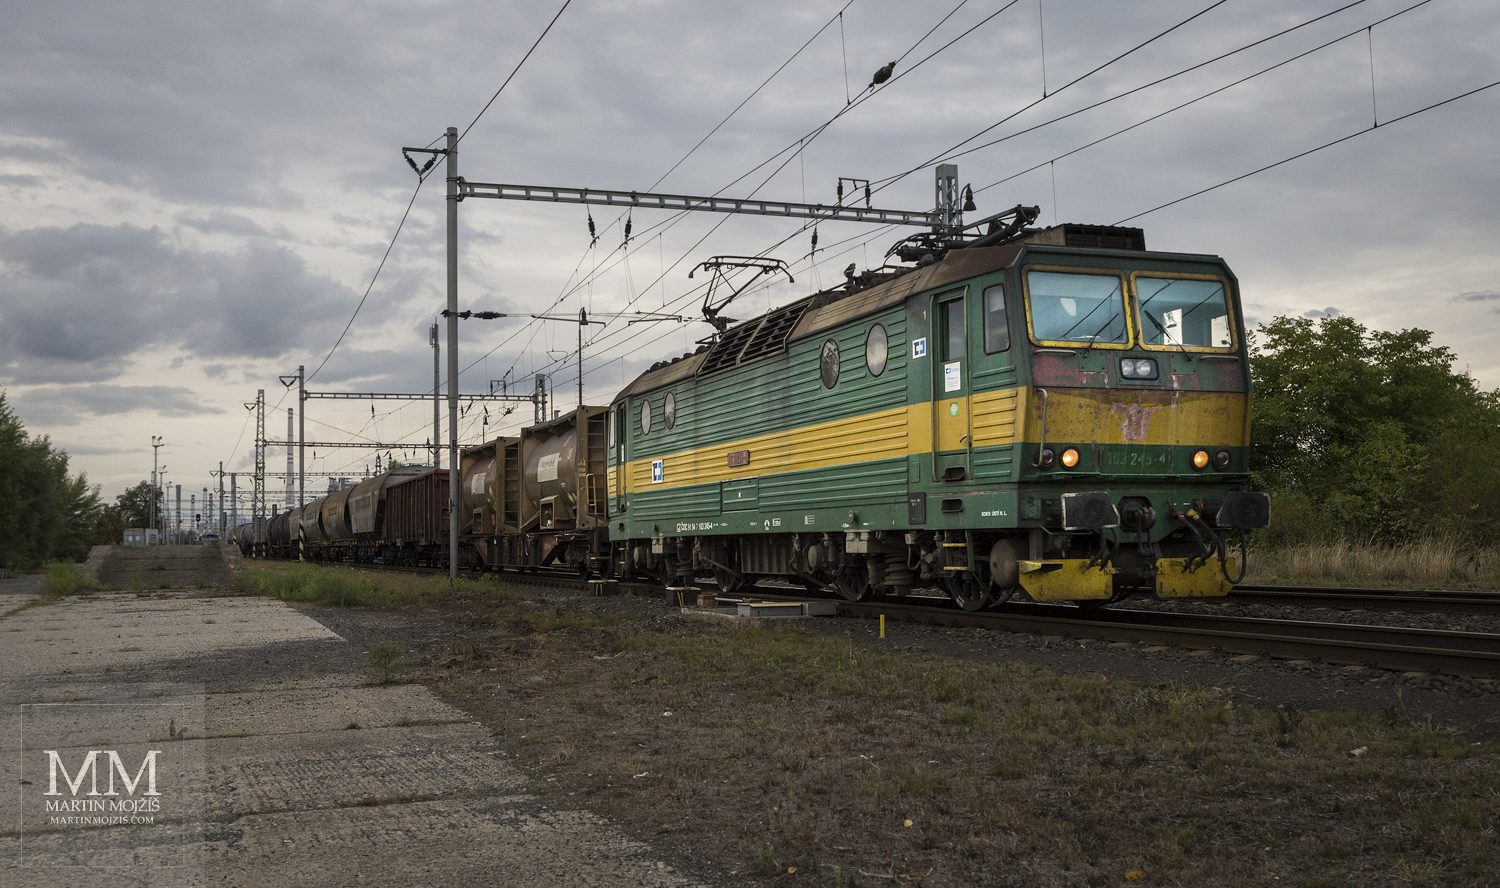 Green and yellow electric locomotive 163 245-4 České dráhy Cargo. Photographic wanderings.